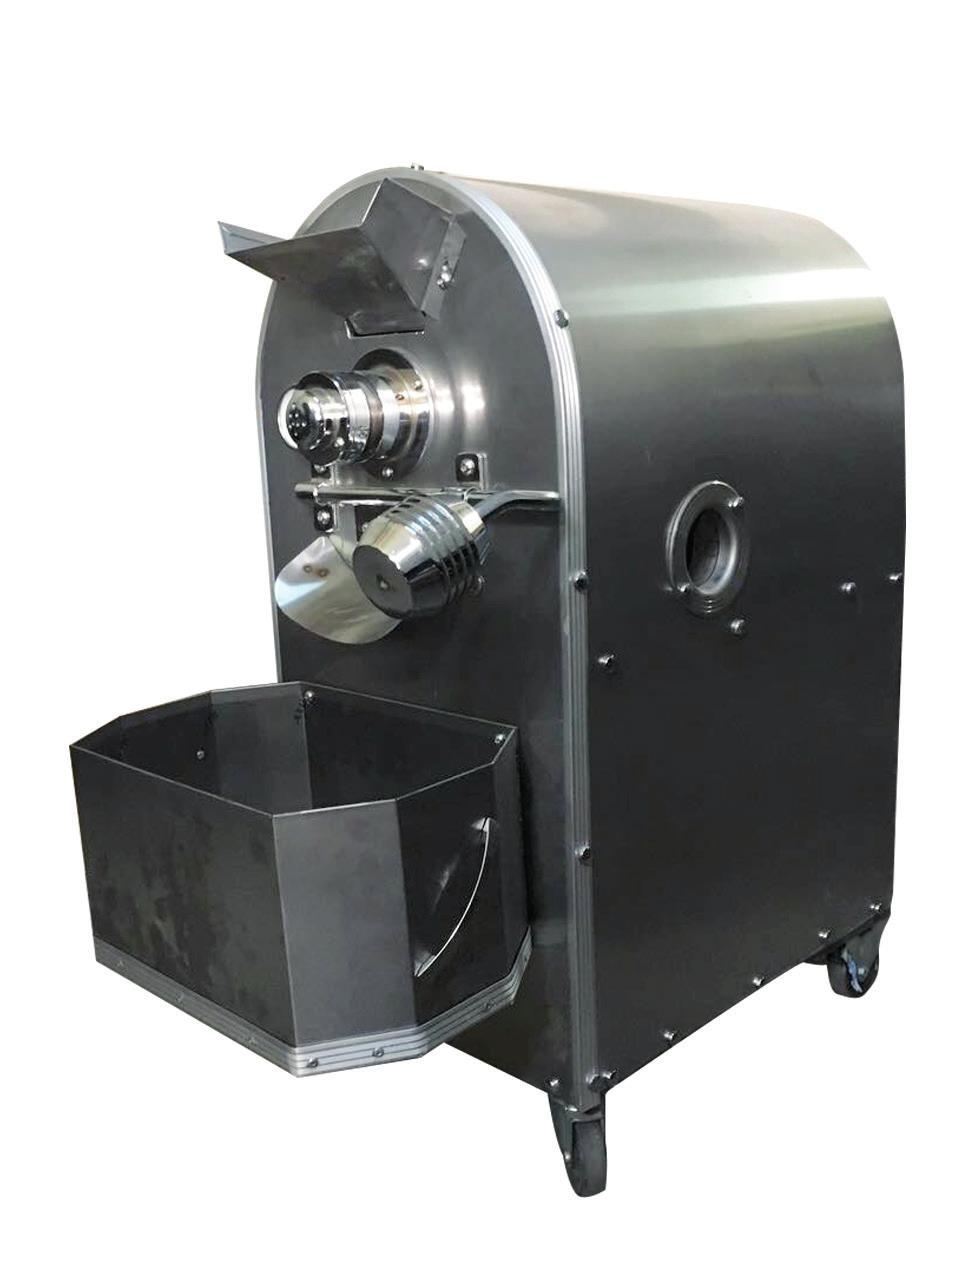 Leblebi Kavurma(Benekleme) Makinesi Chickpea Roasting Machine 17 Leblebi Kızartma Makinelerimiz ; 2kg, 4kg(Yarım Teneke), 8kg(1 Teneke), Chickpeas Roasting Machines are produduced